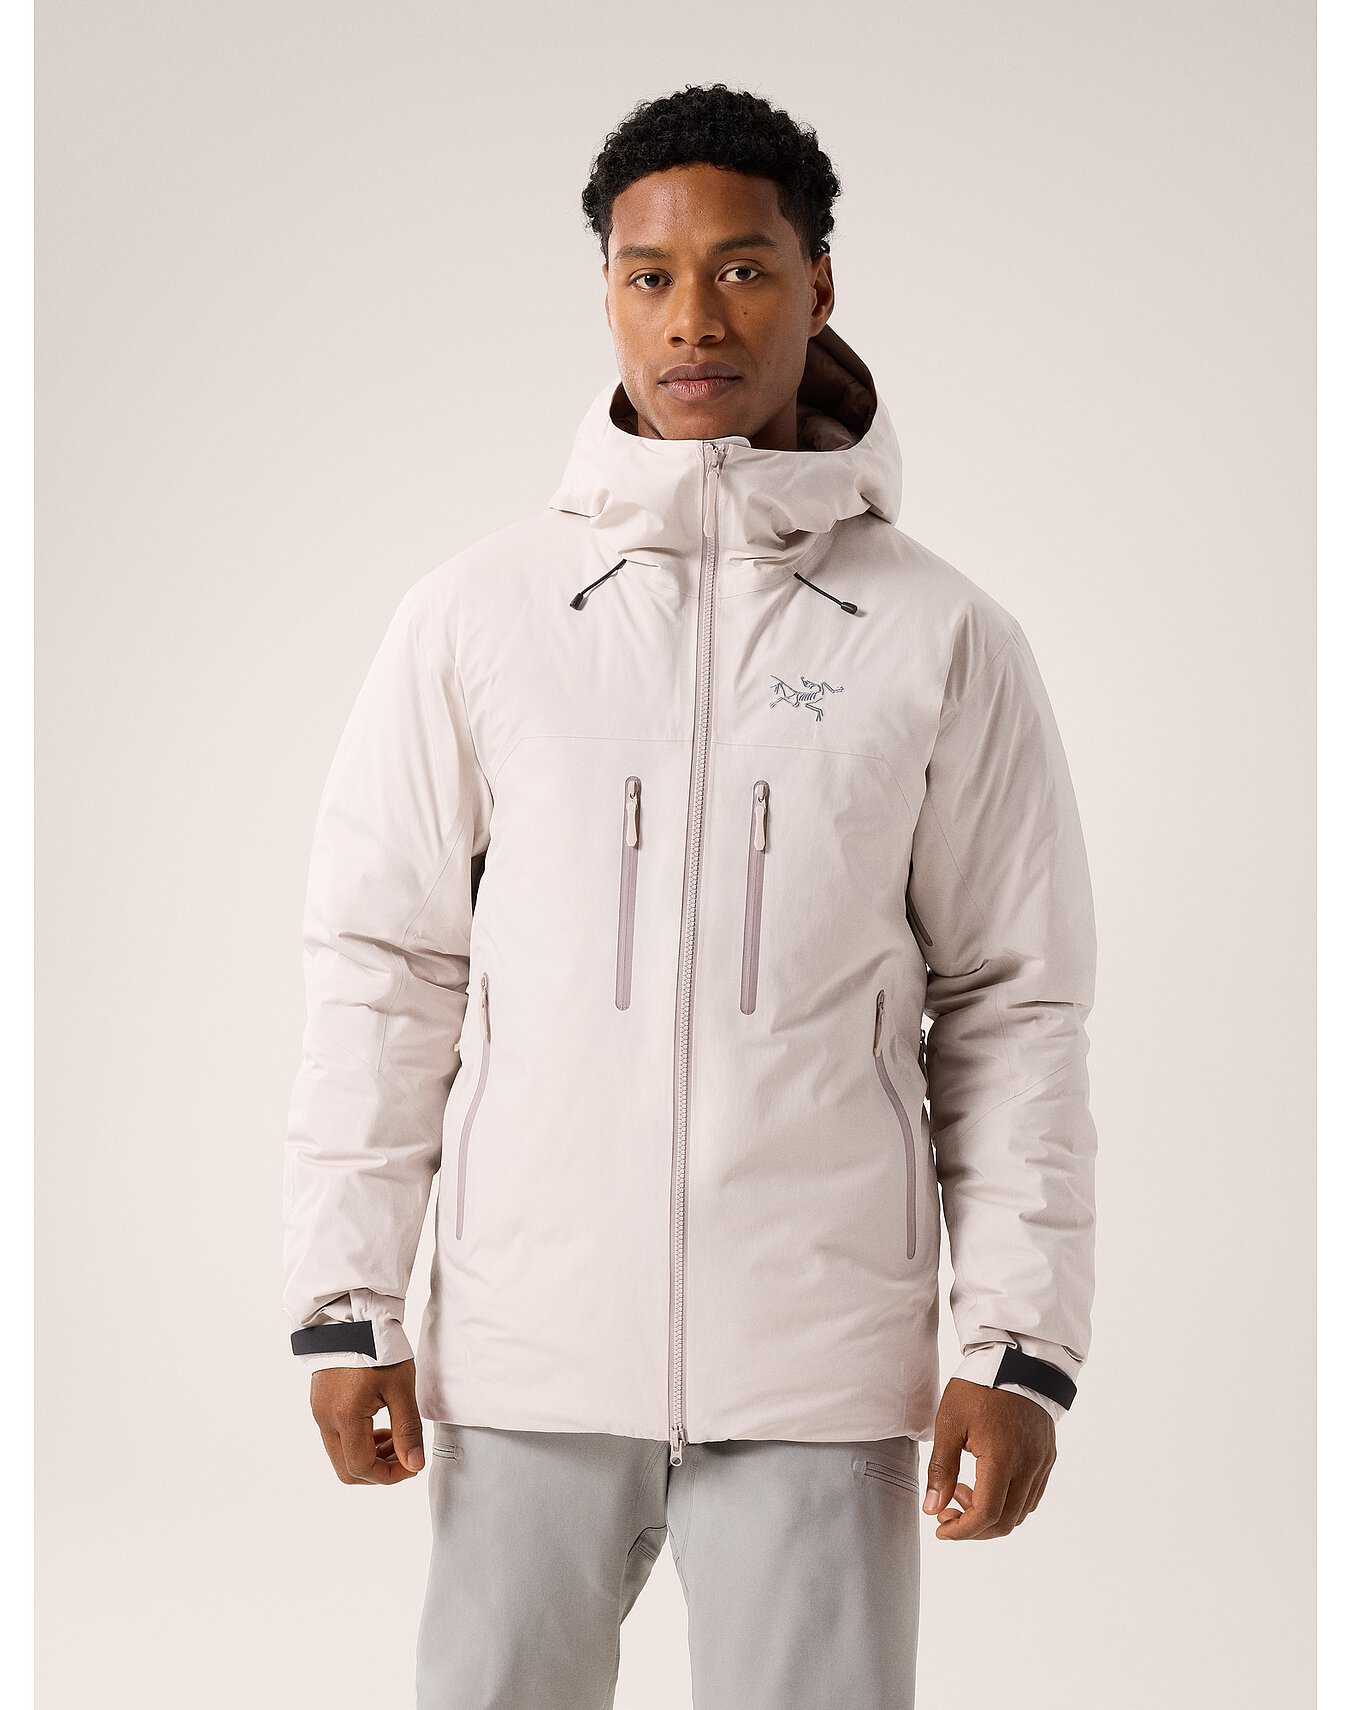 Men's Gore-tex (Waterproof) Insulated Jackets | Arc'teryx